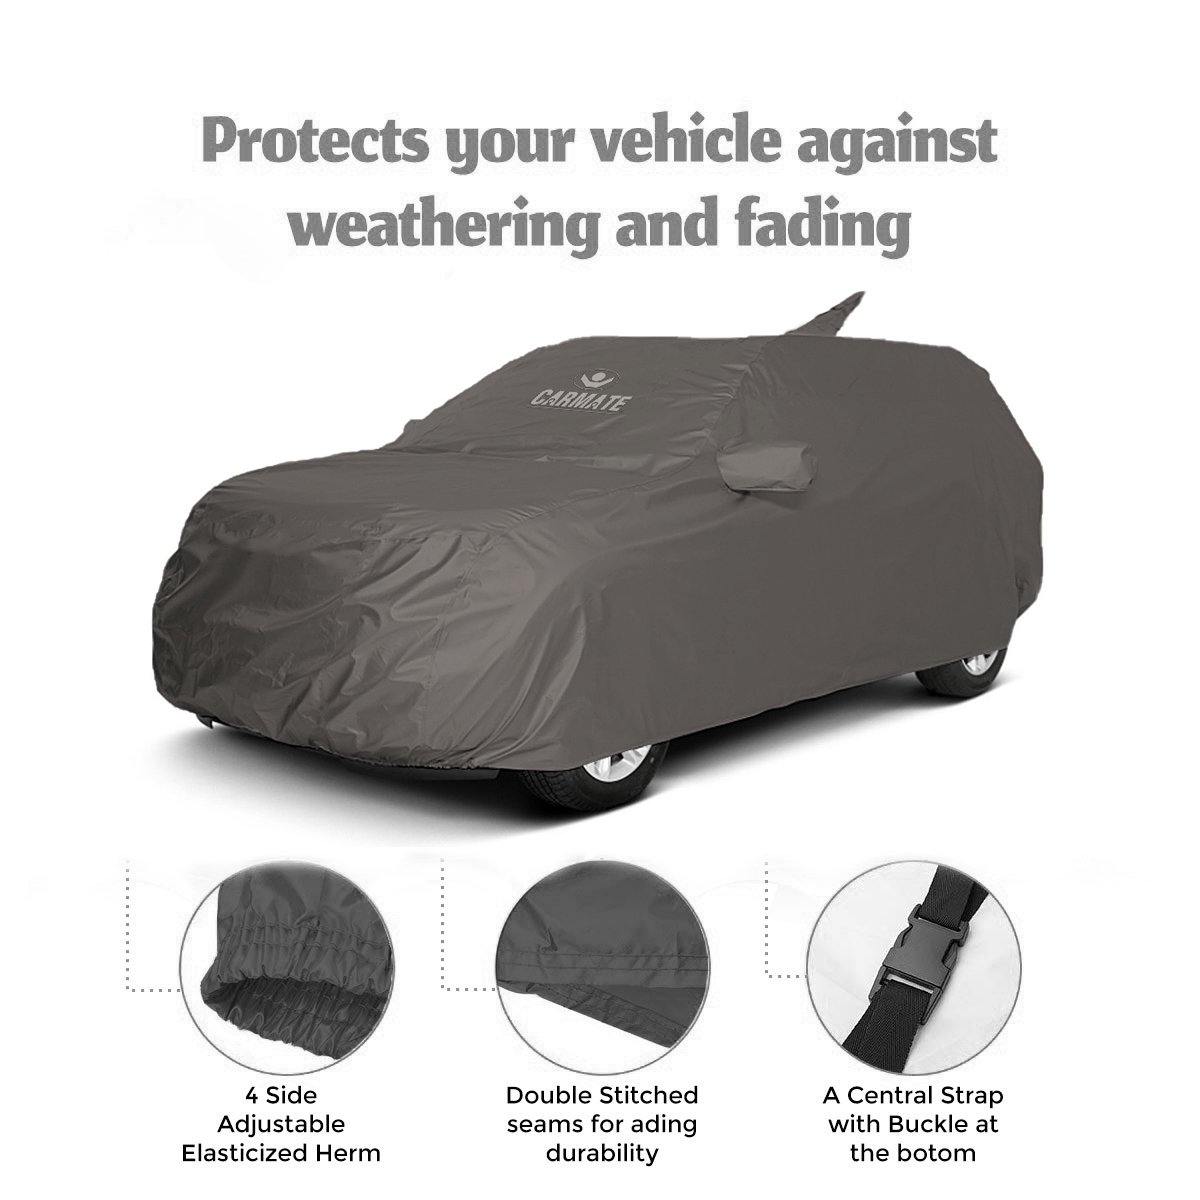 Carmate Car Body Cover 100% Waterproof Pride (Grey) for Audi - A3 - CARMATE®